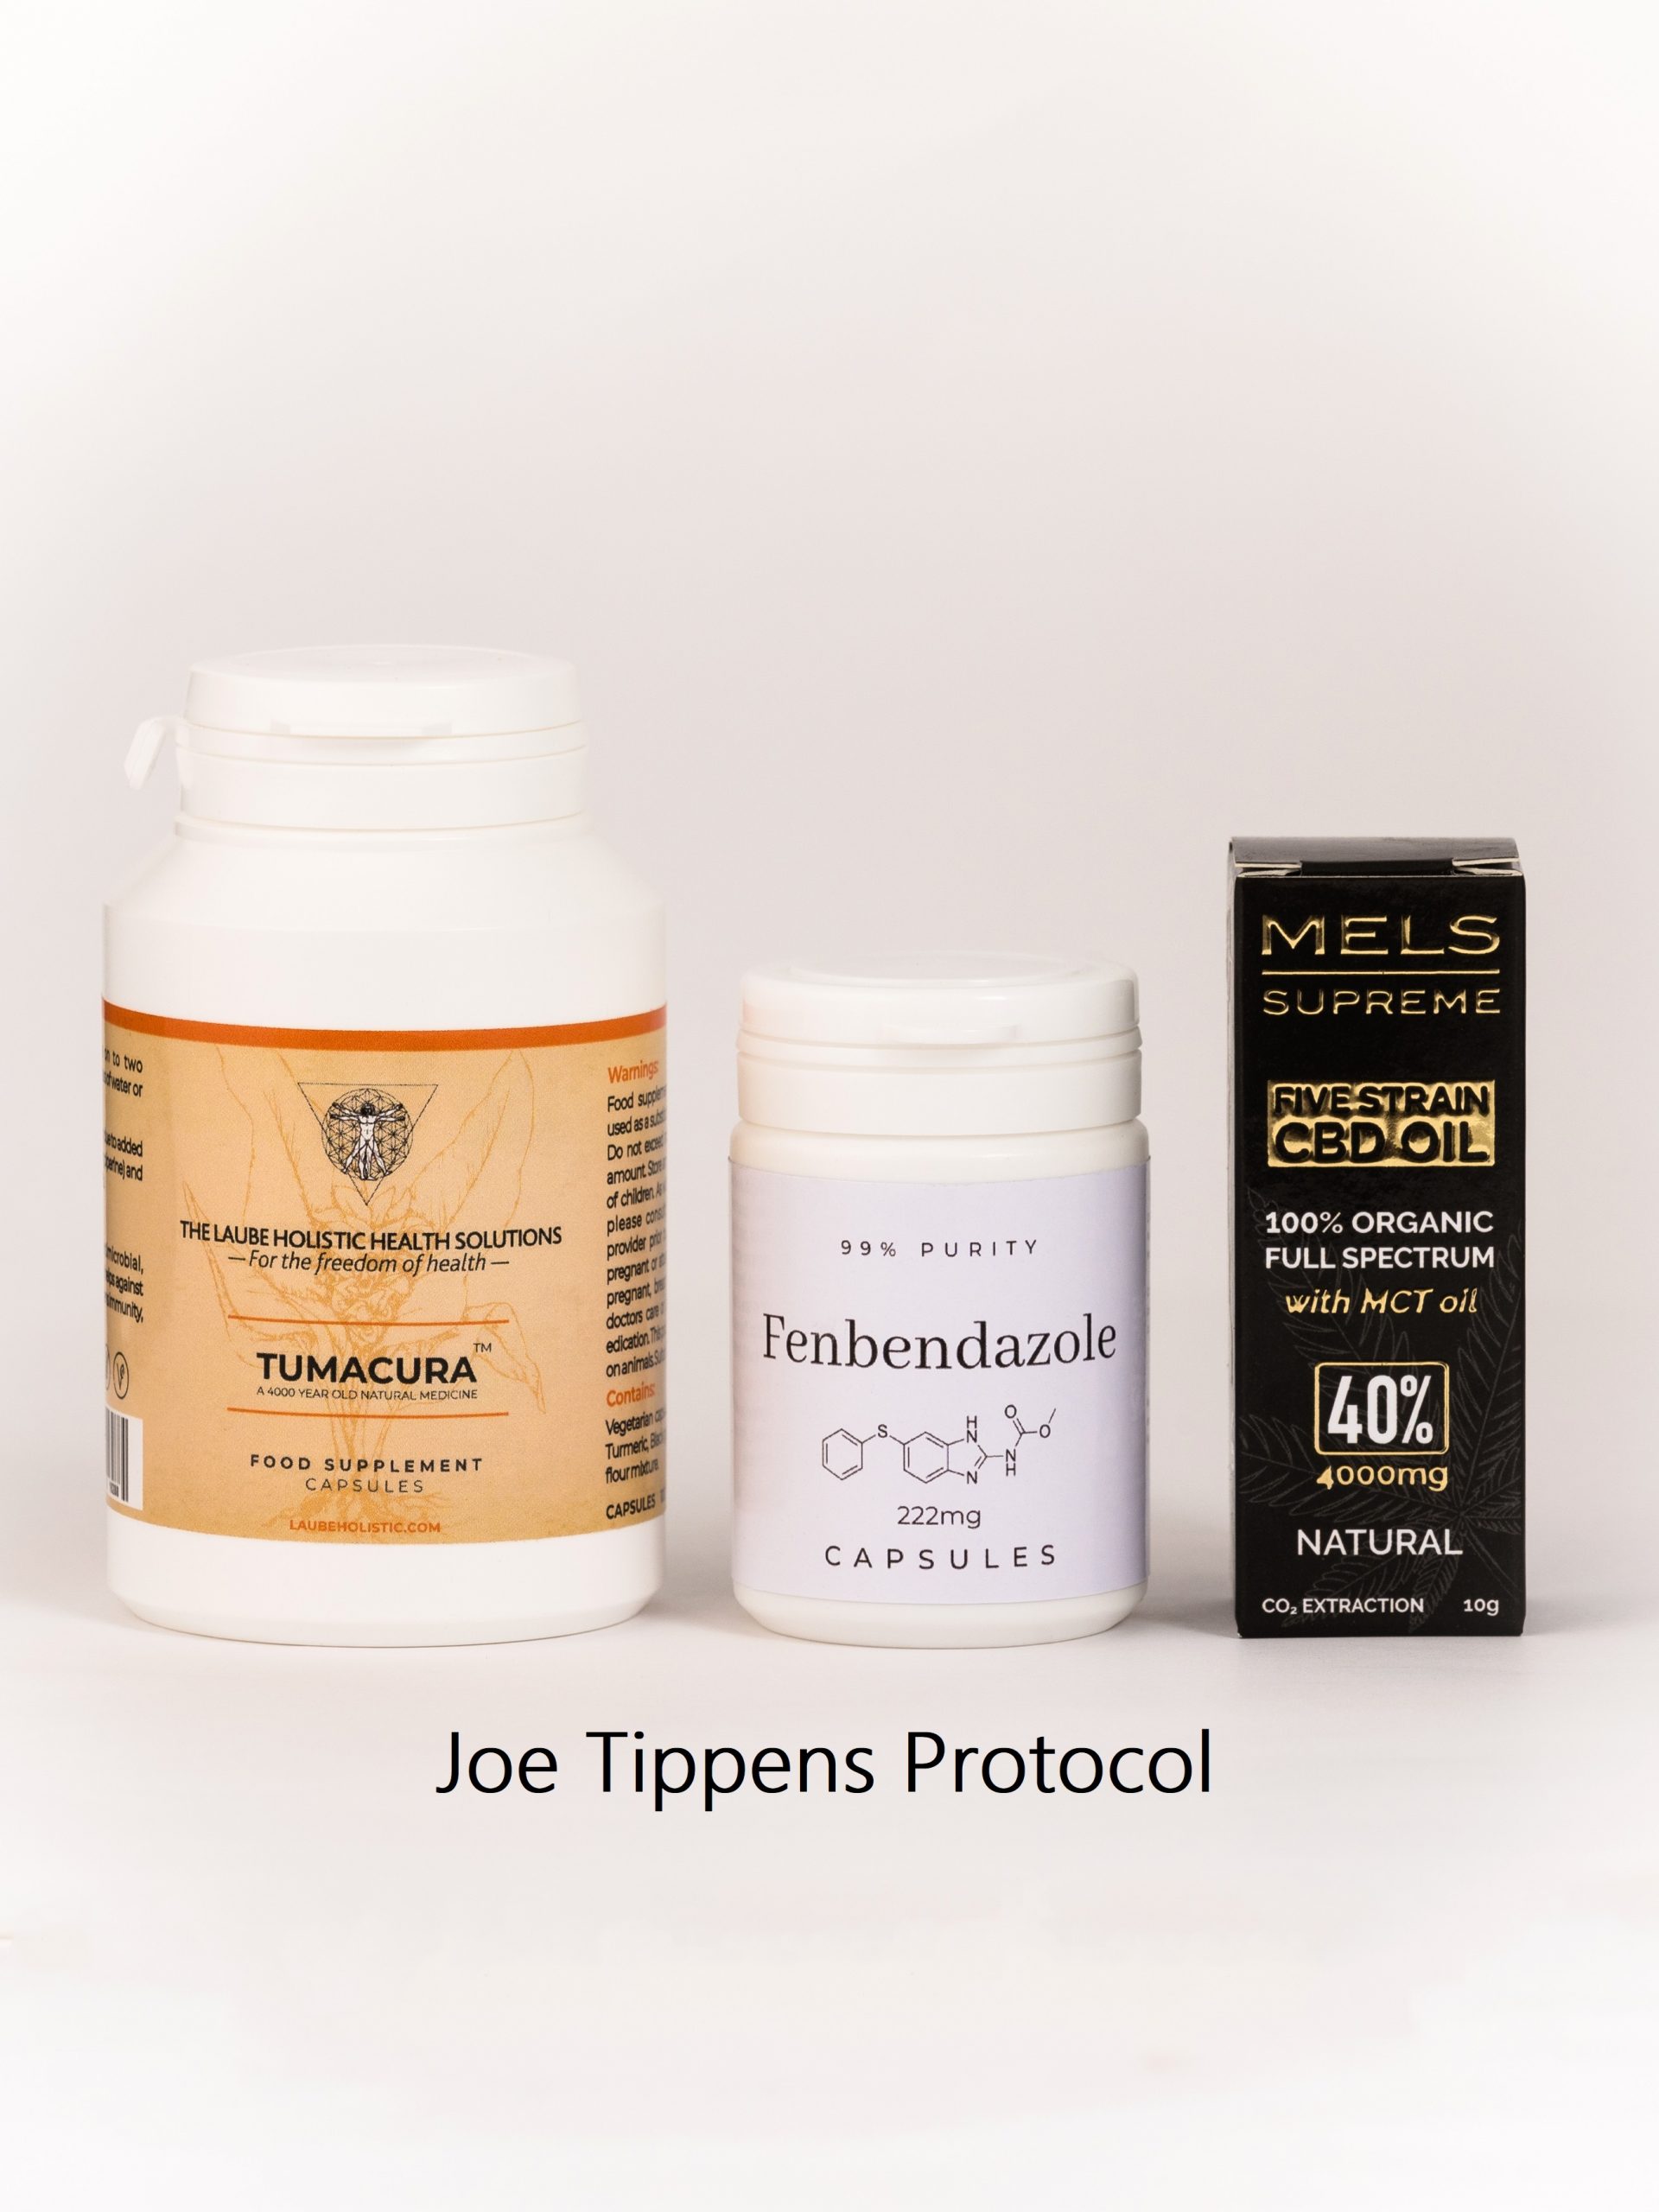 Joe Tippens Protocol